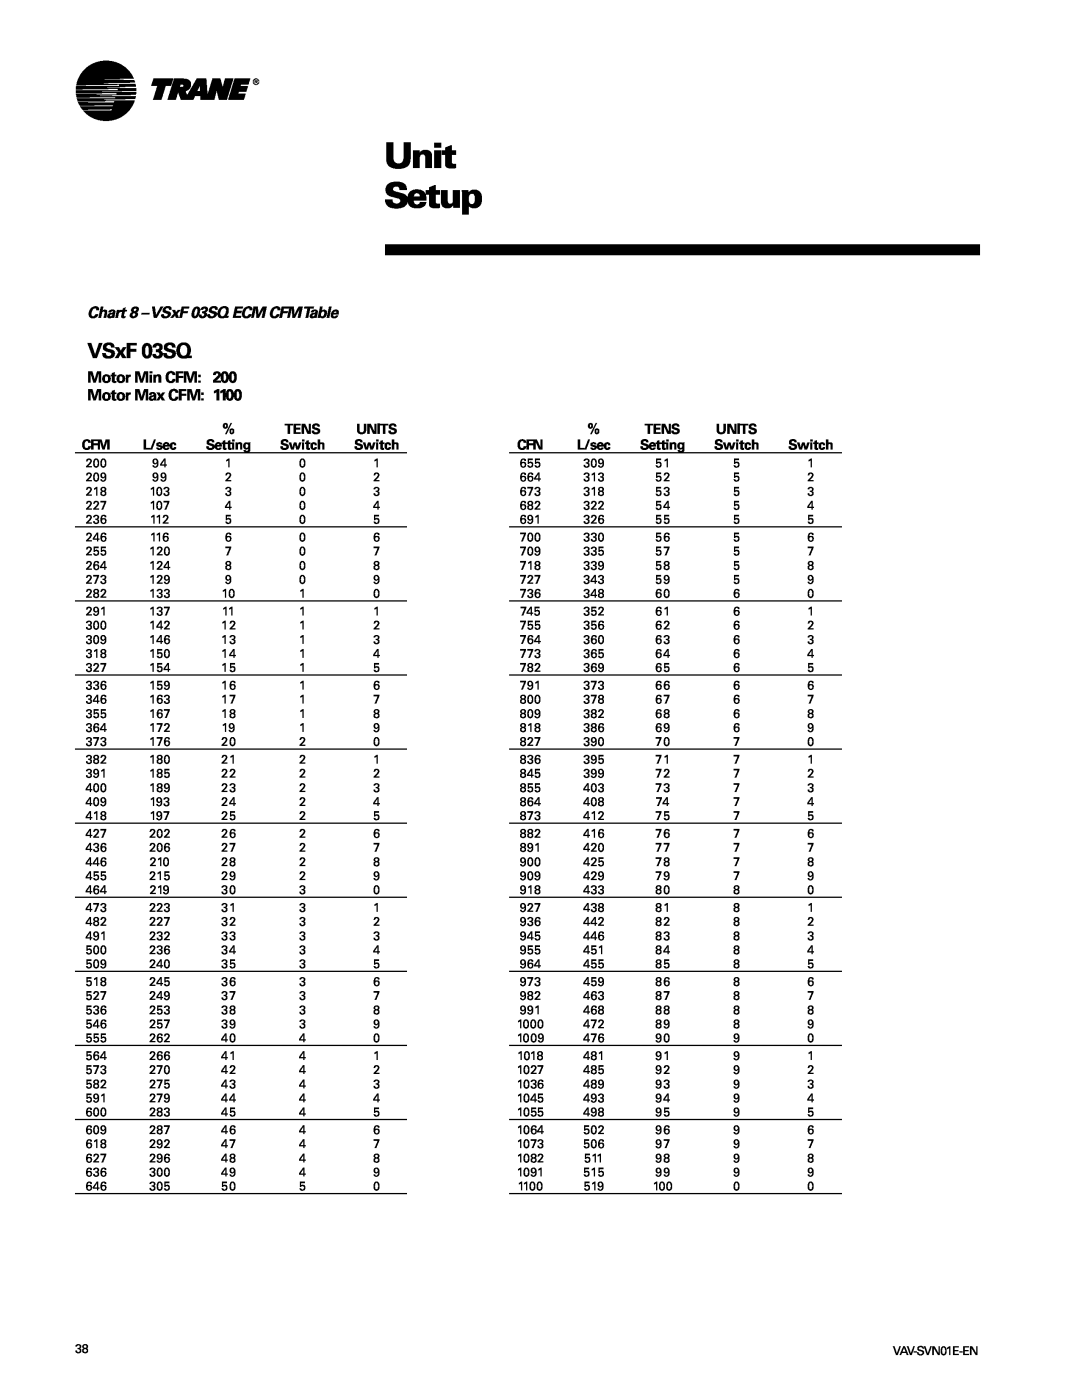 Trane VAV-SVN01E-EN, Trane manual VSxF 03SQ, Unit Setup, Chart 8 -VSxF03SQ ECM CFMTable, Tens, Units, L/sec, Setting 